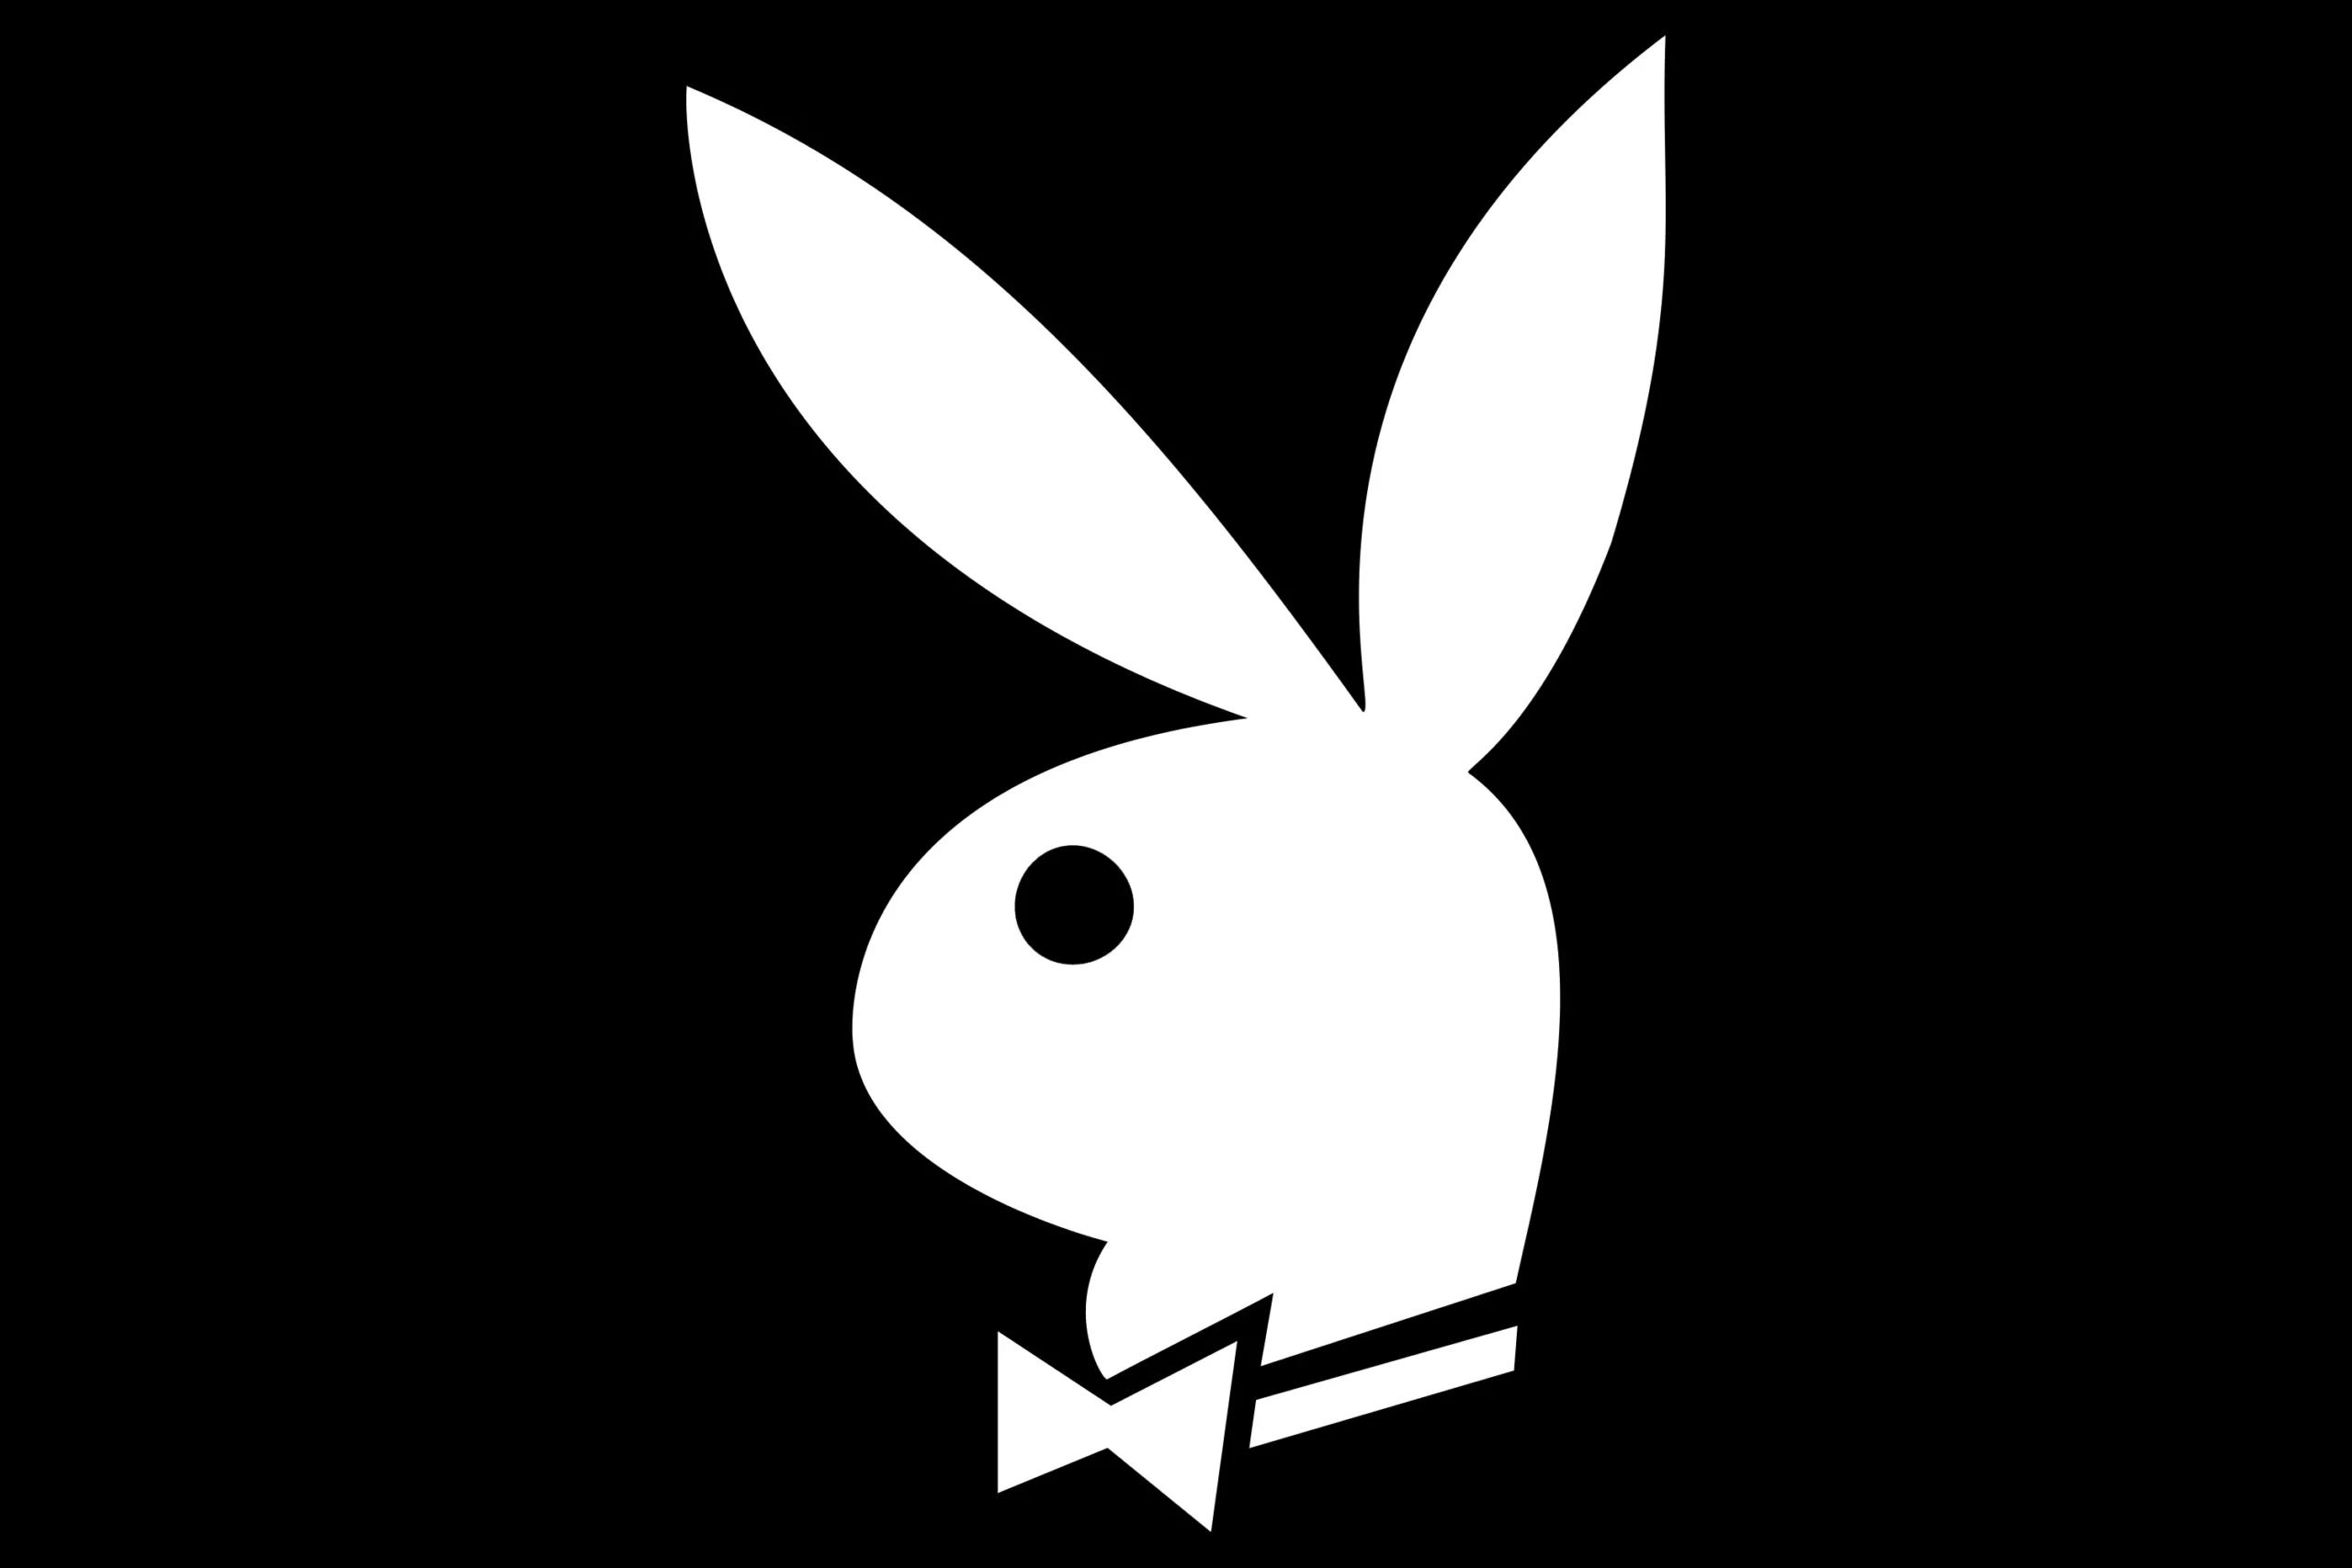 https://nftgames.net/wp-content/uploads/2023/03/Playboy-Enterprises-loses-4.9-million-on-its-Ethereum-based-NFT-project-scaled.webp